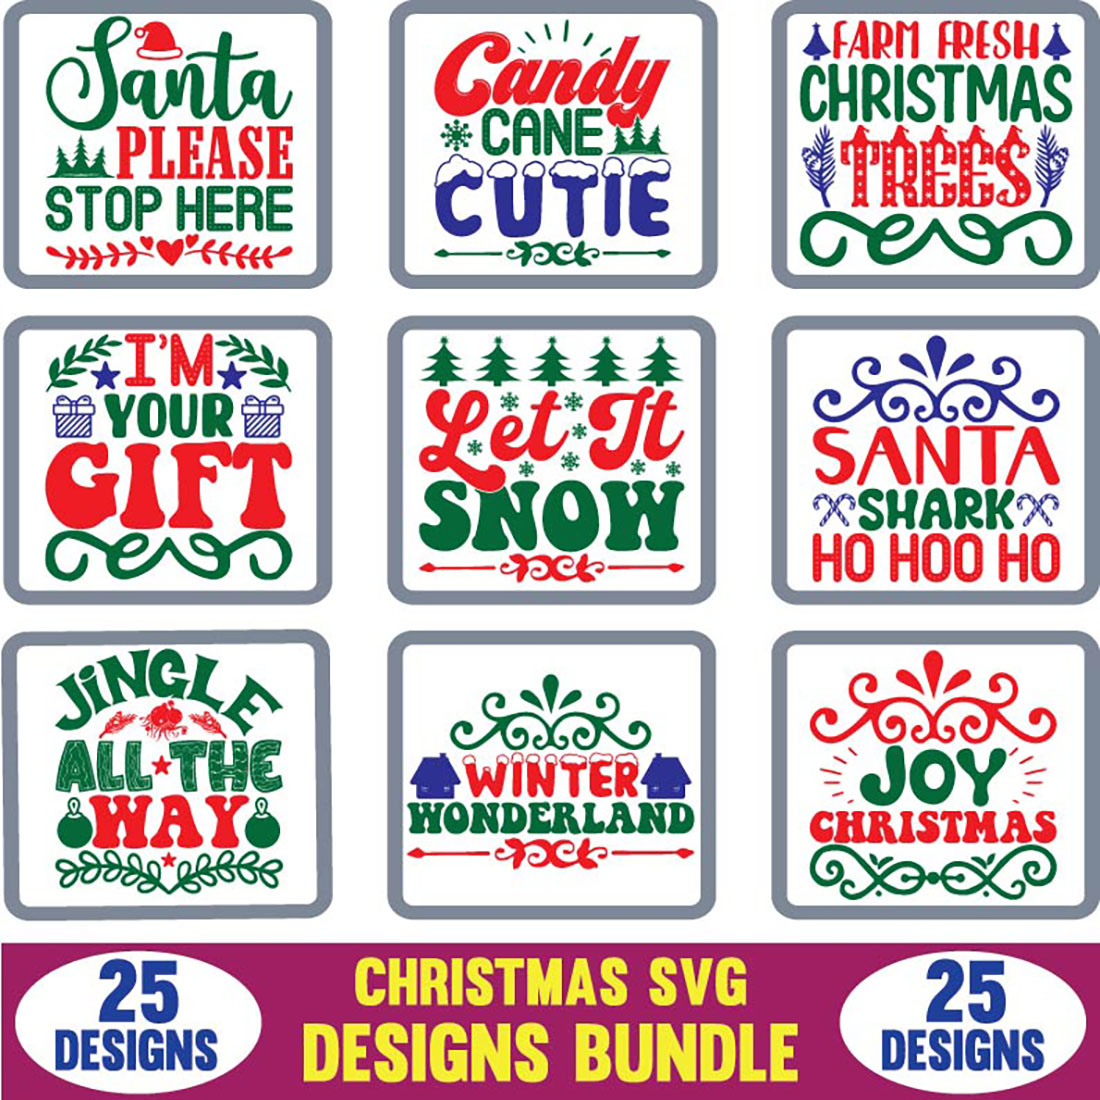 Christmas SVG Designs Bundle Cover.